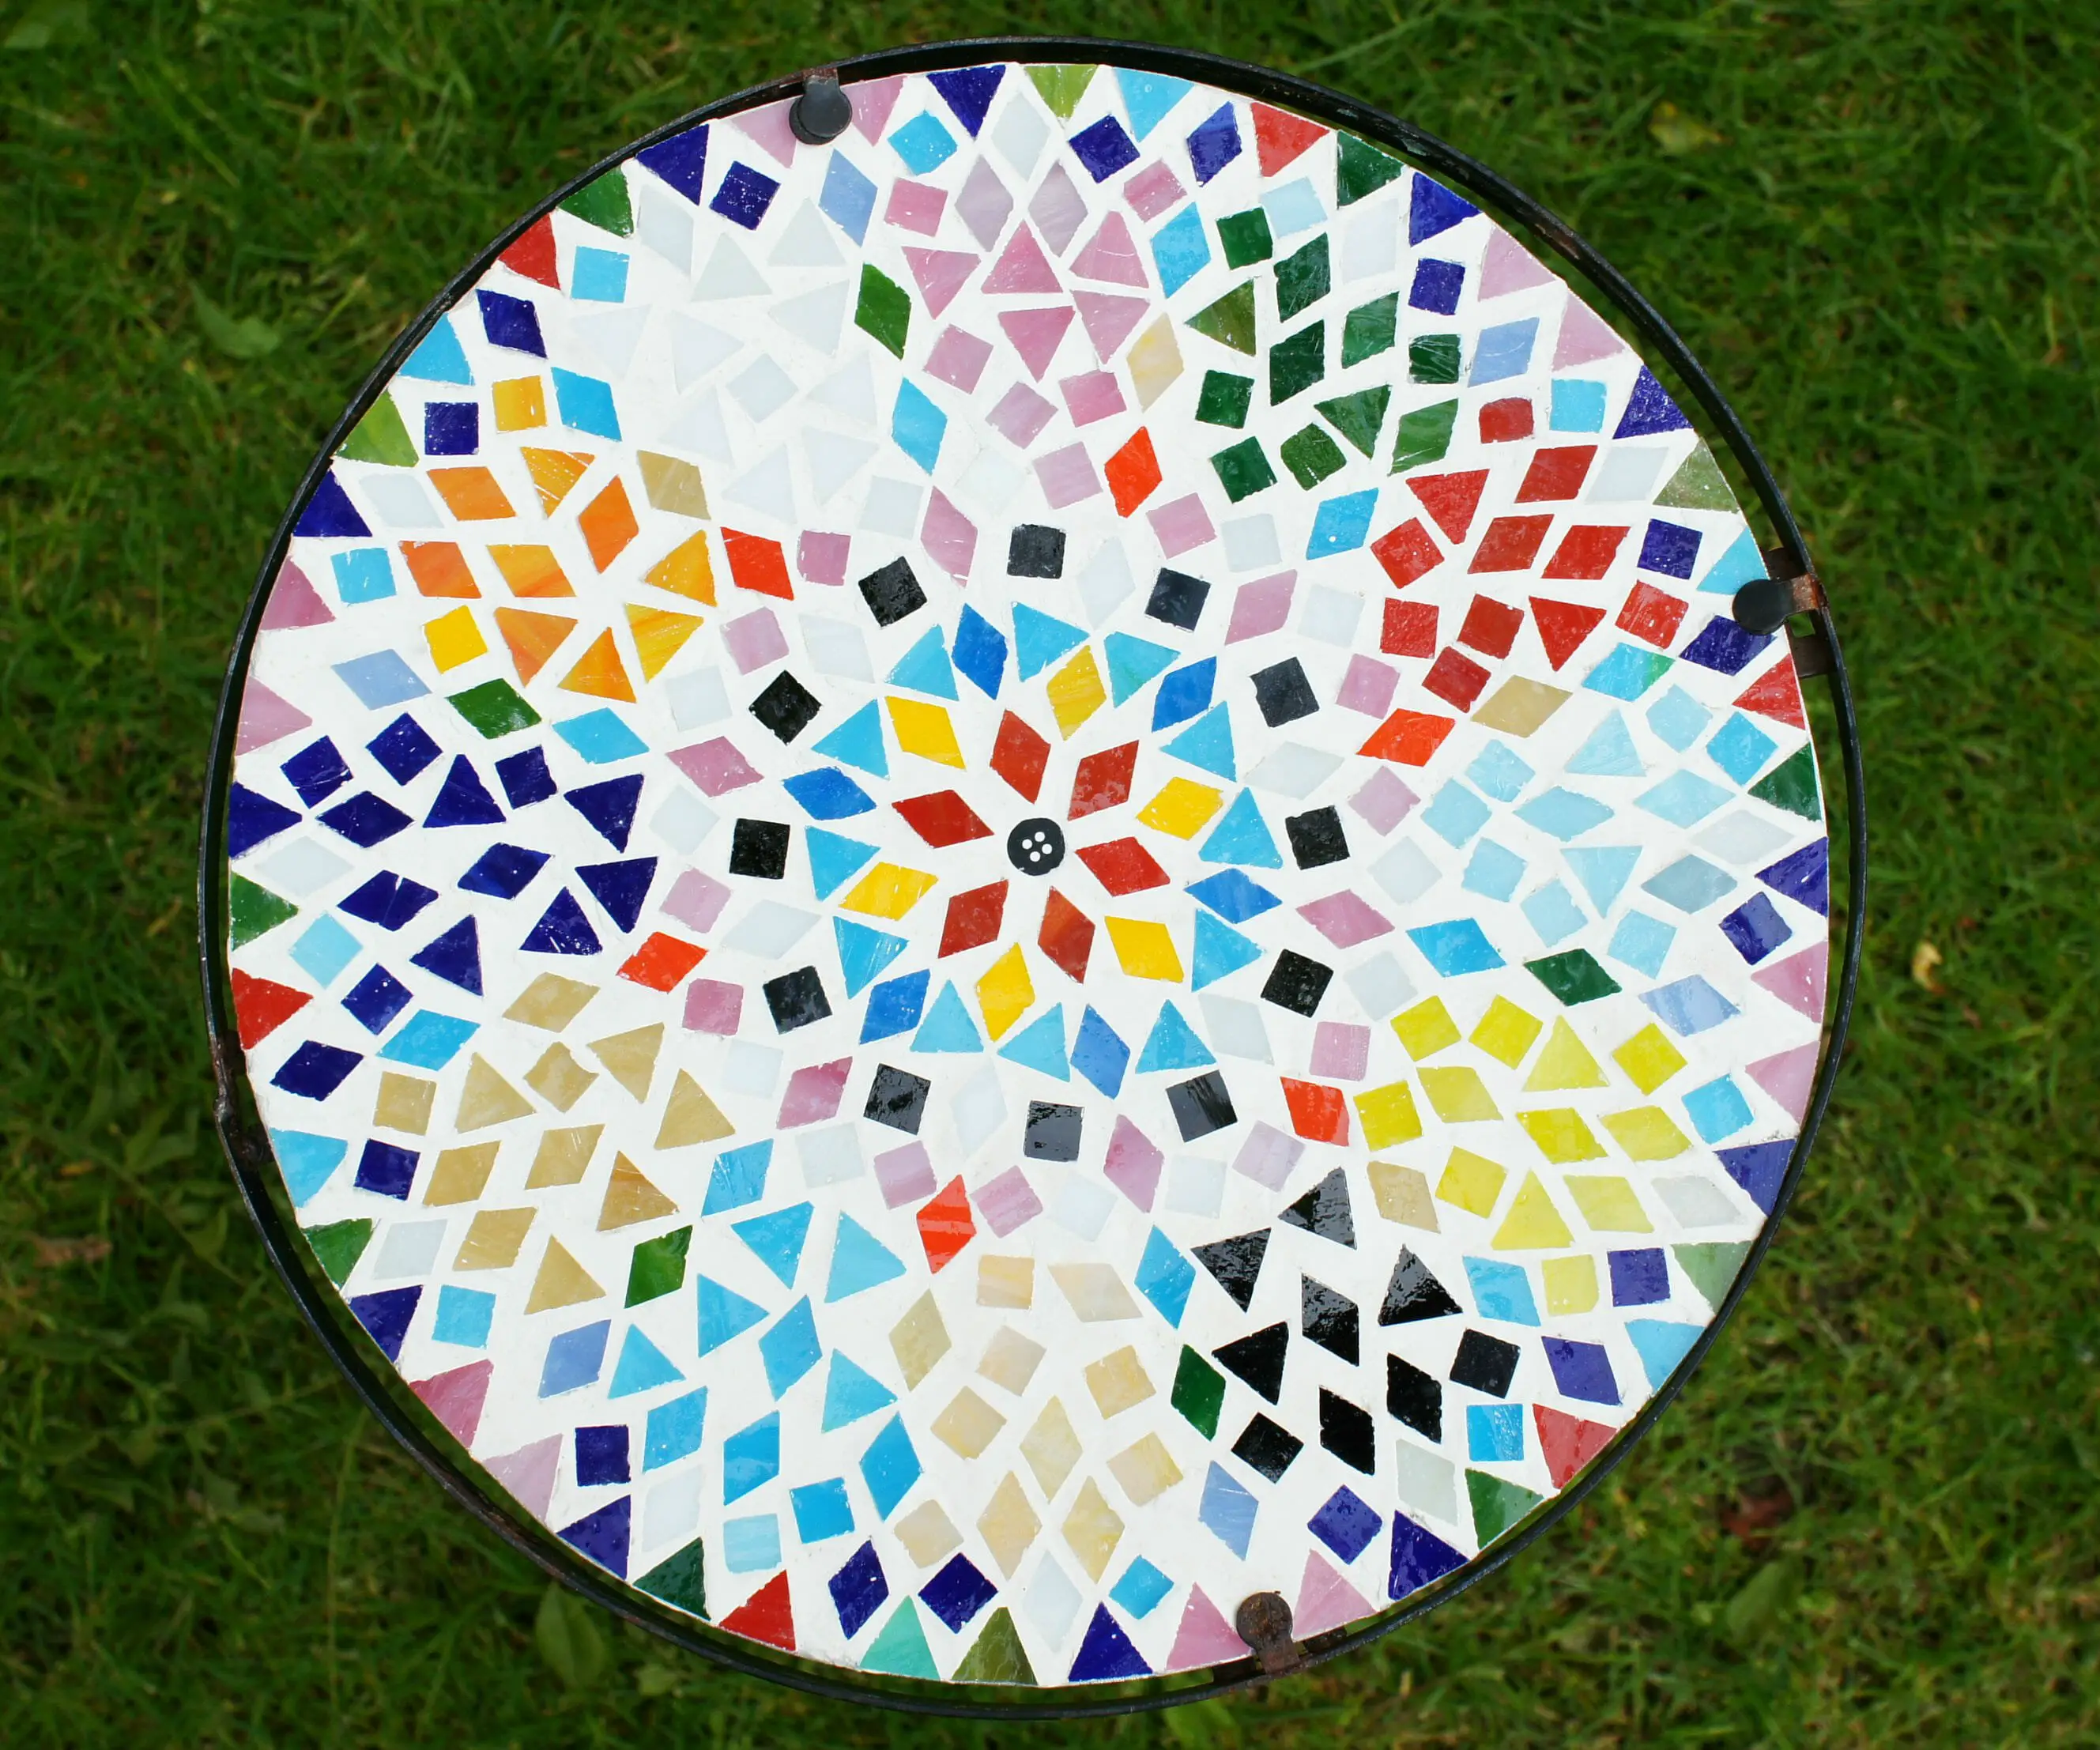 How To Make A Mosaic Table Christine